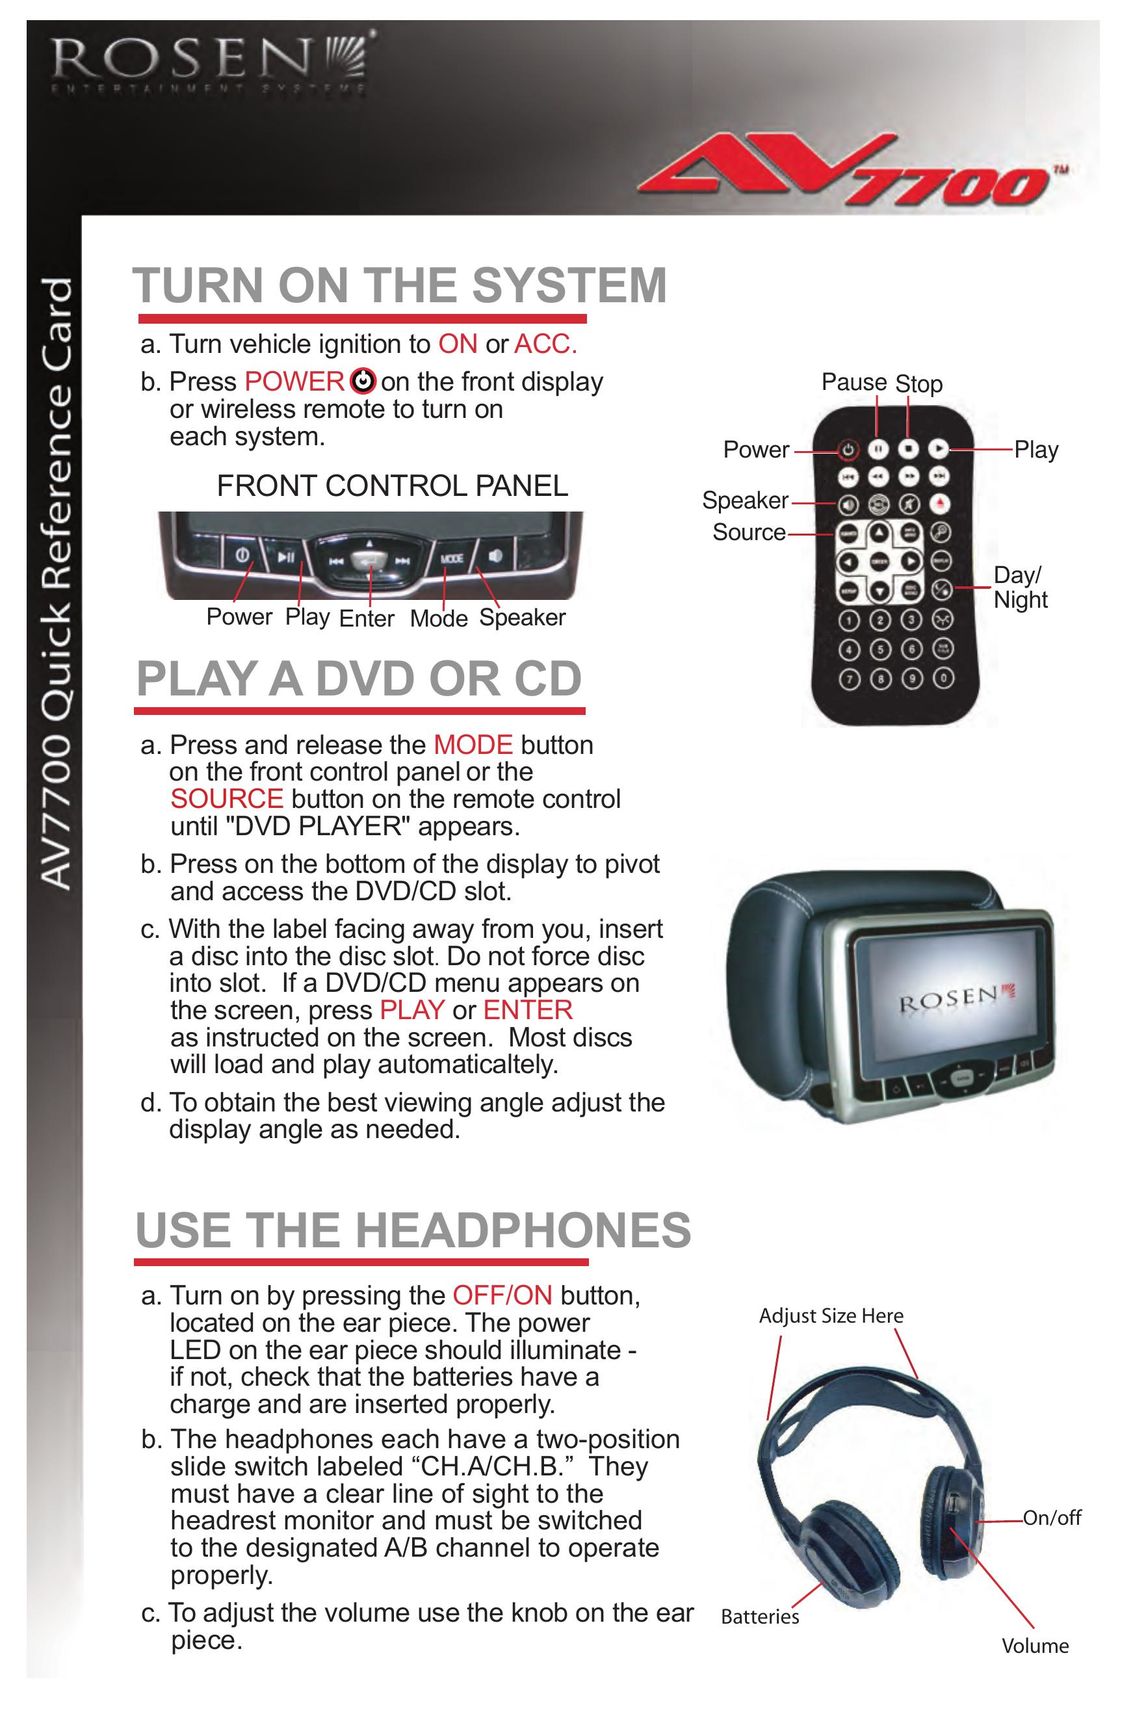 Rosen Entertainment Systems AV7700 Car Video System User Manual